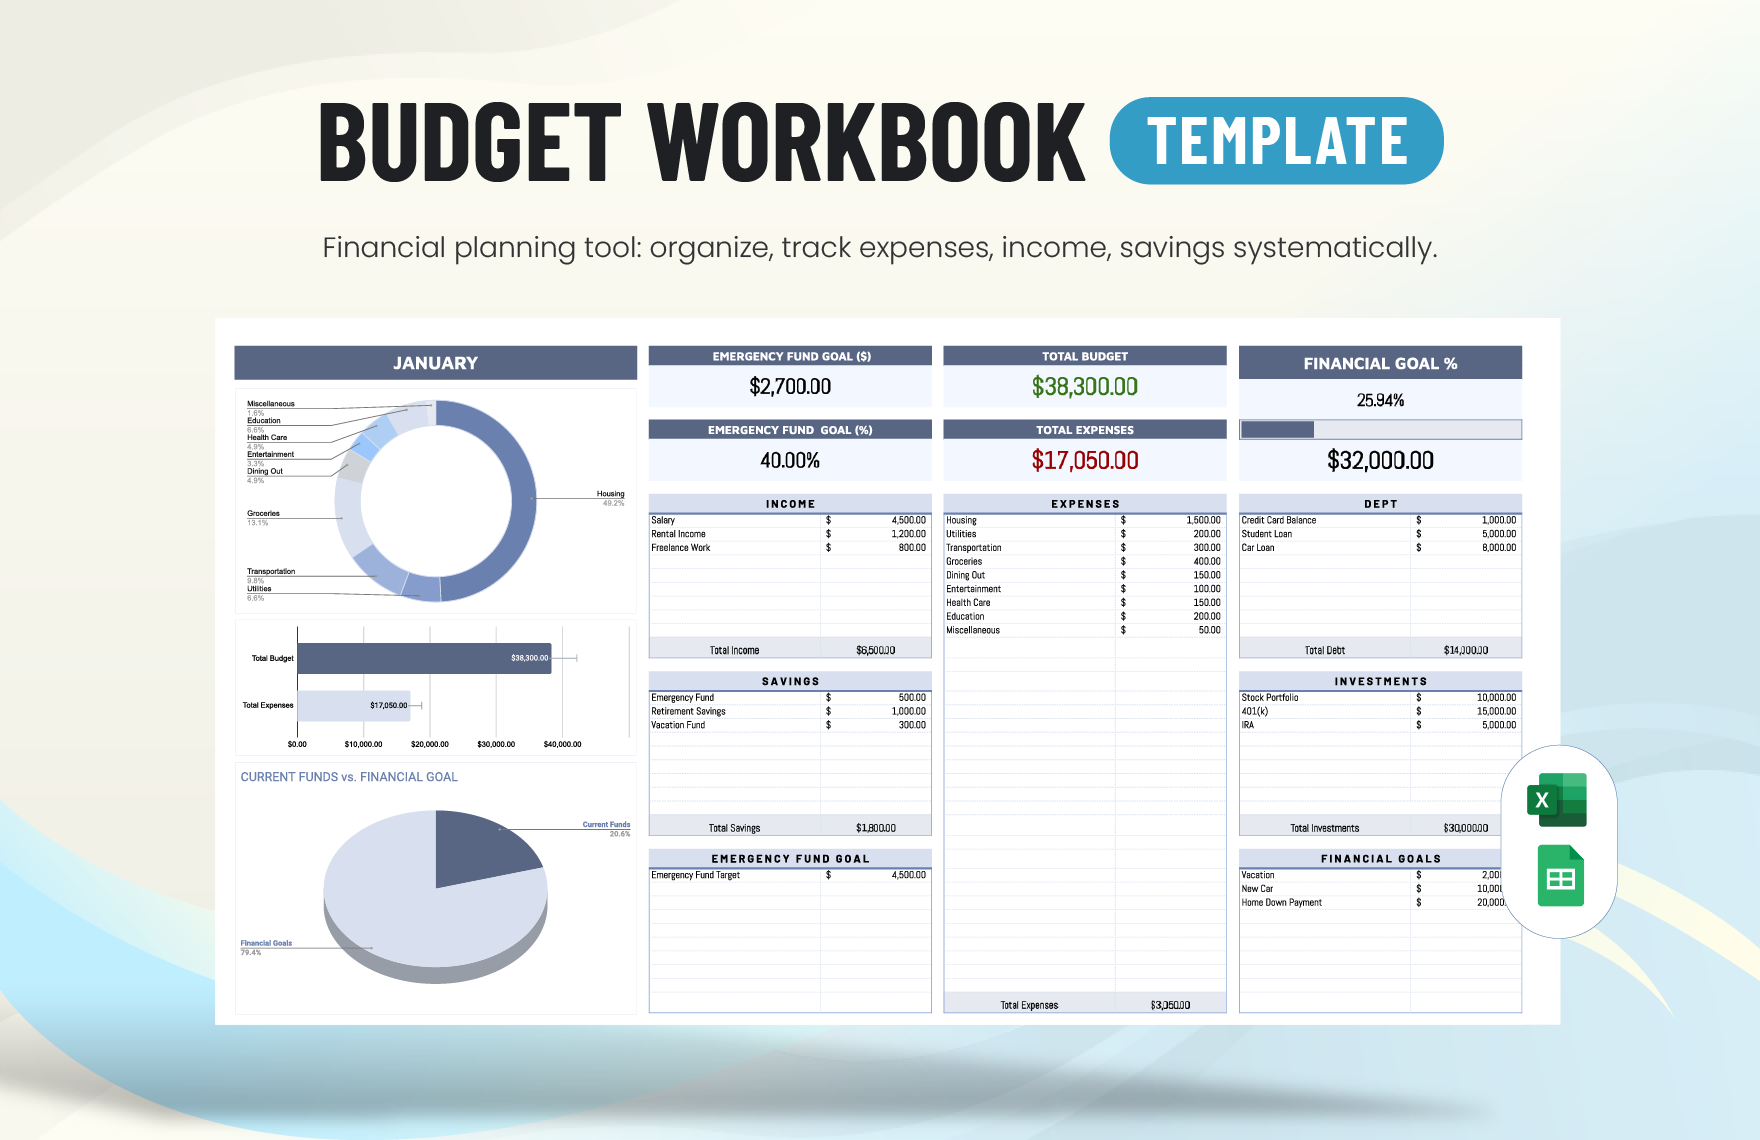 Budget Workbook Template